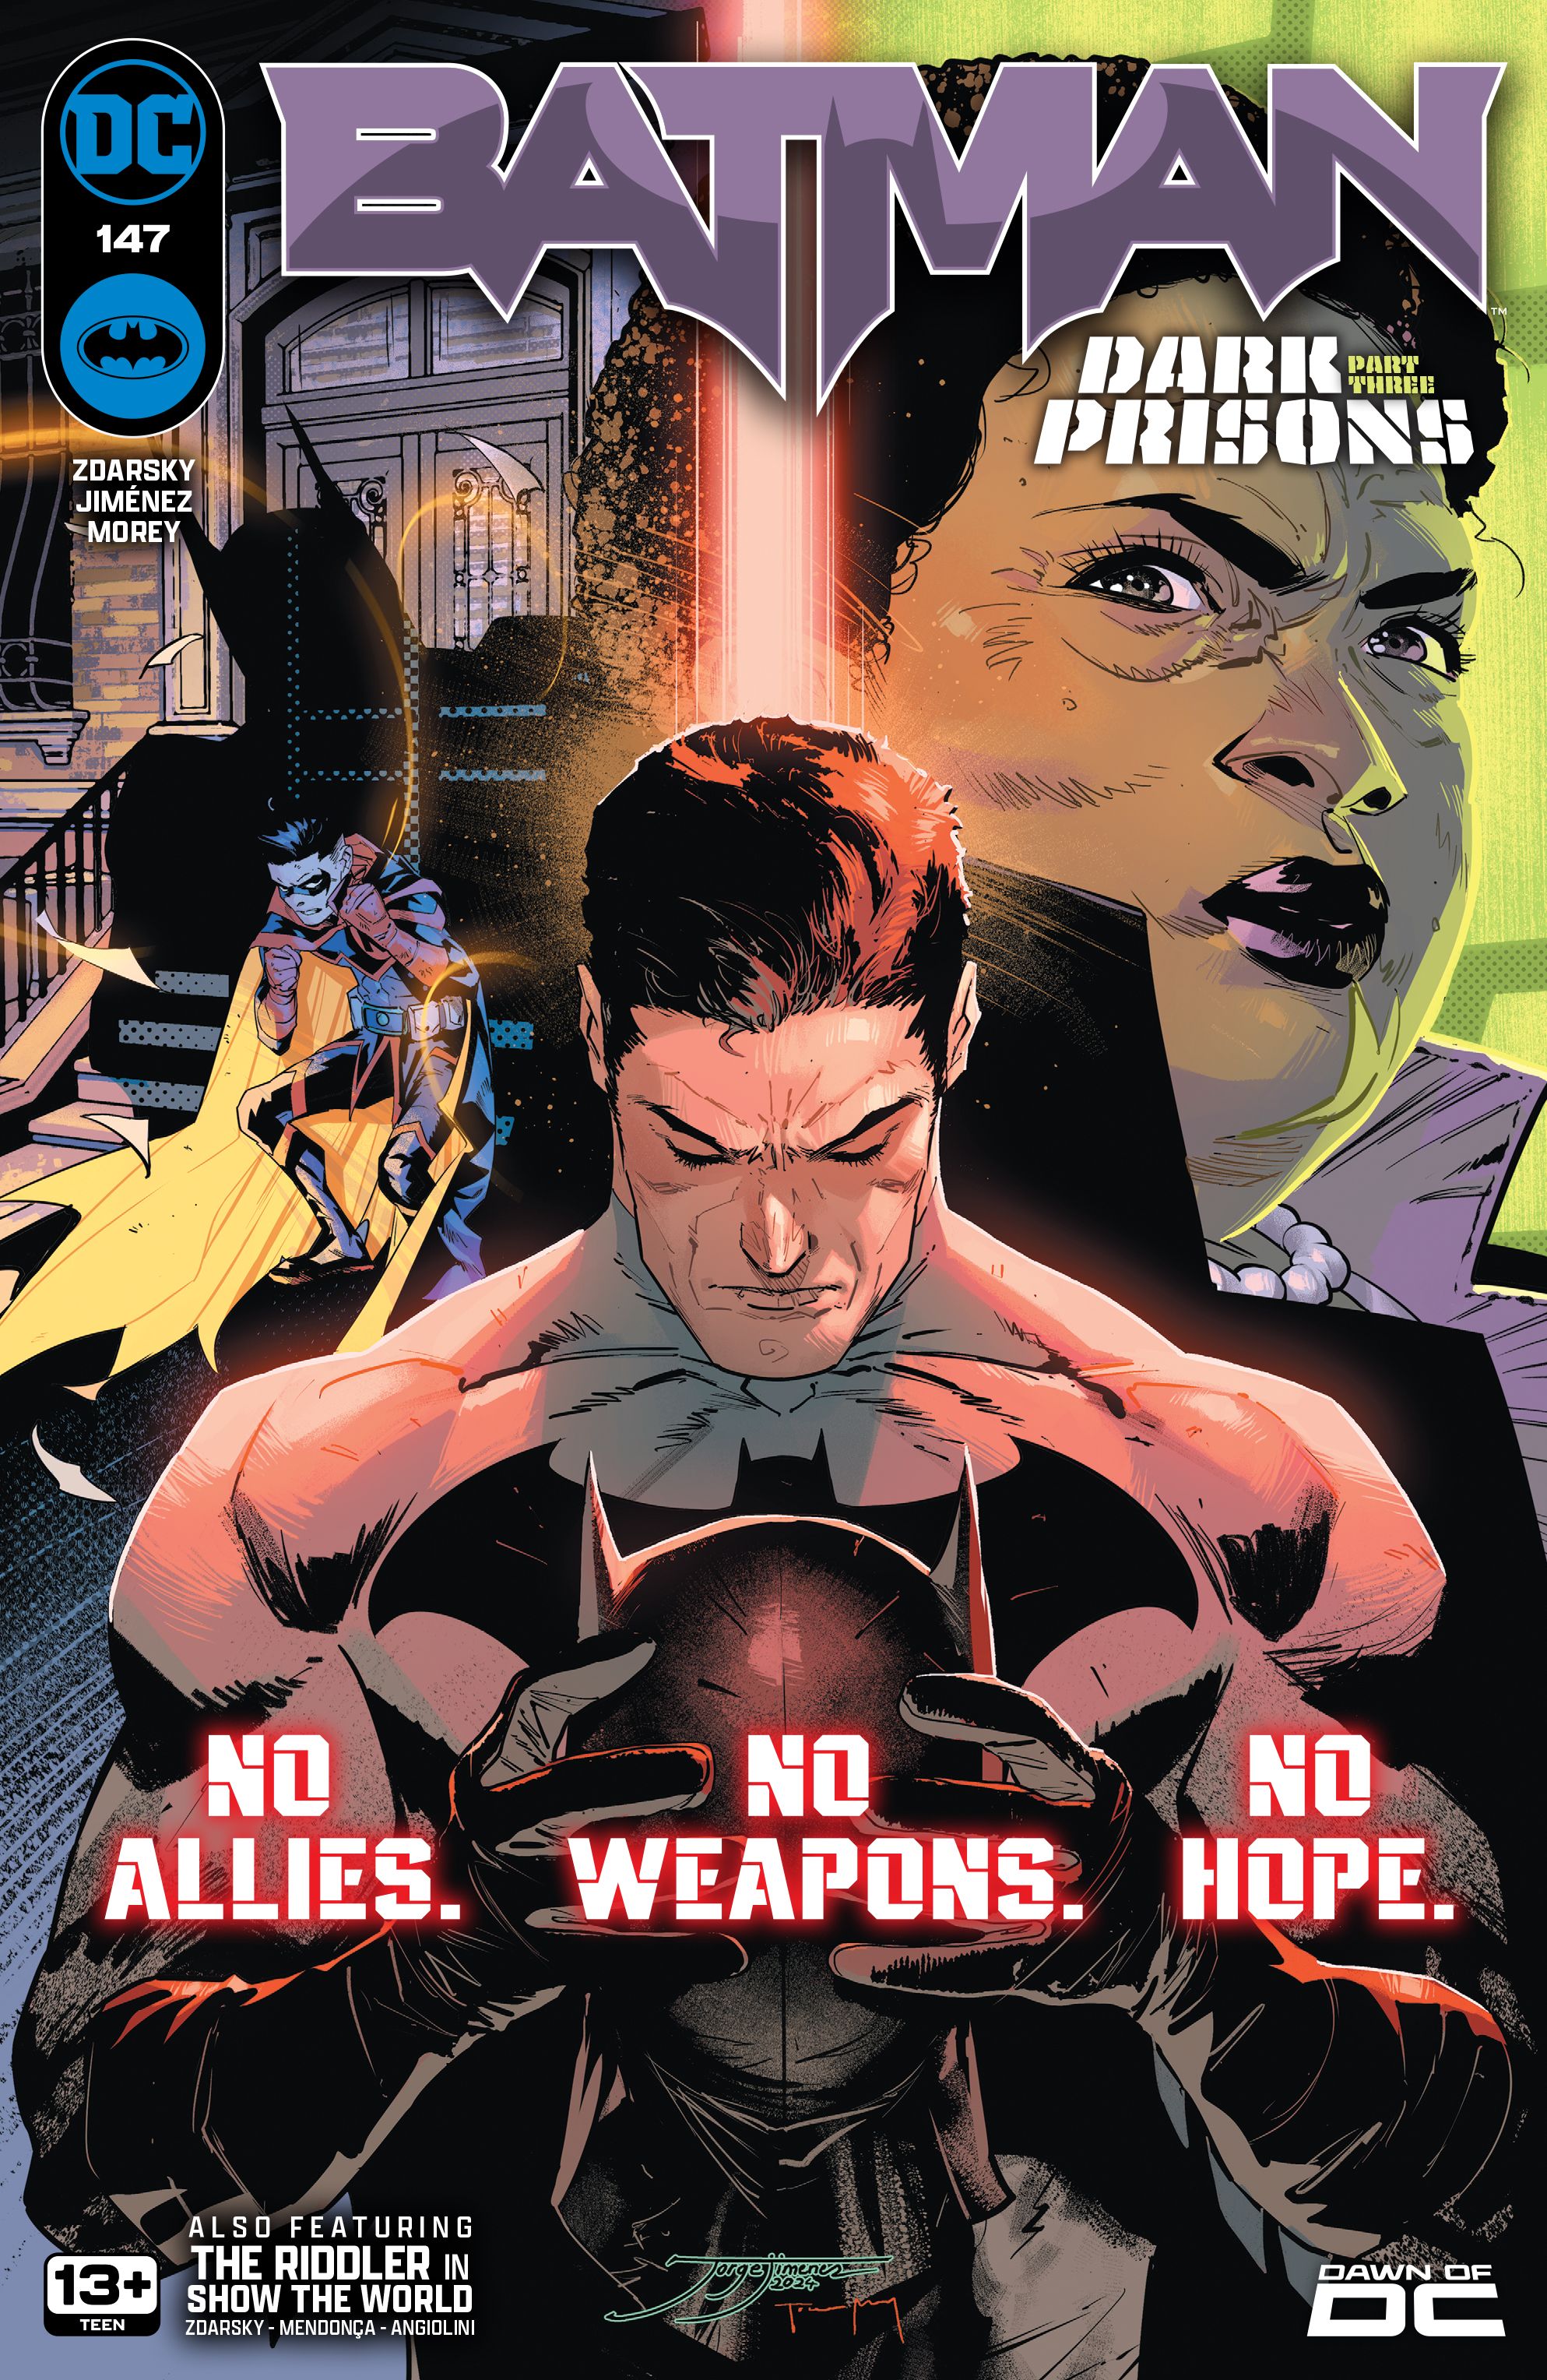 Capa principal do Batman 147: Bruce segura seu capuz do Batman na frente de outras imagens de Robin Damian Wayne e Amanda Waller.